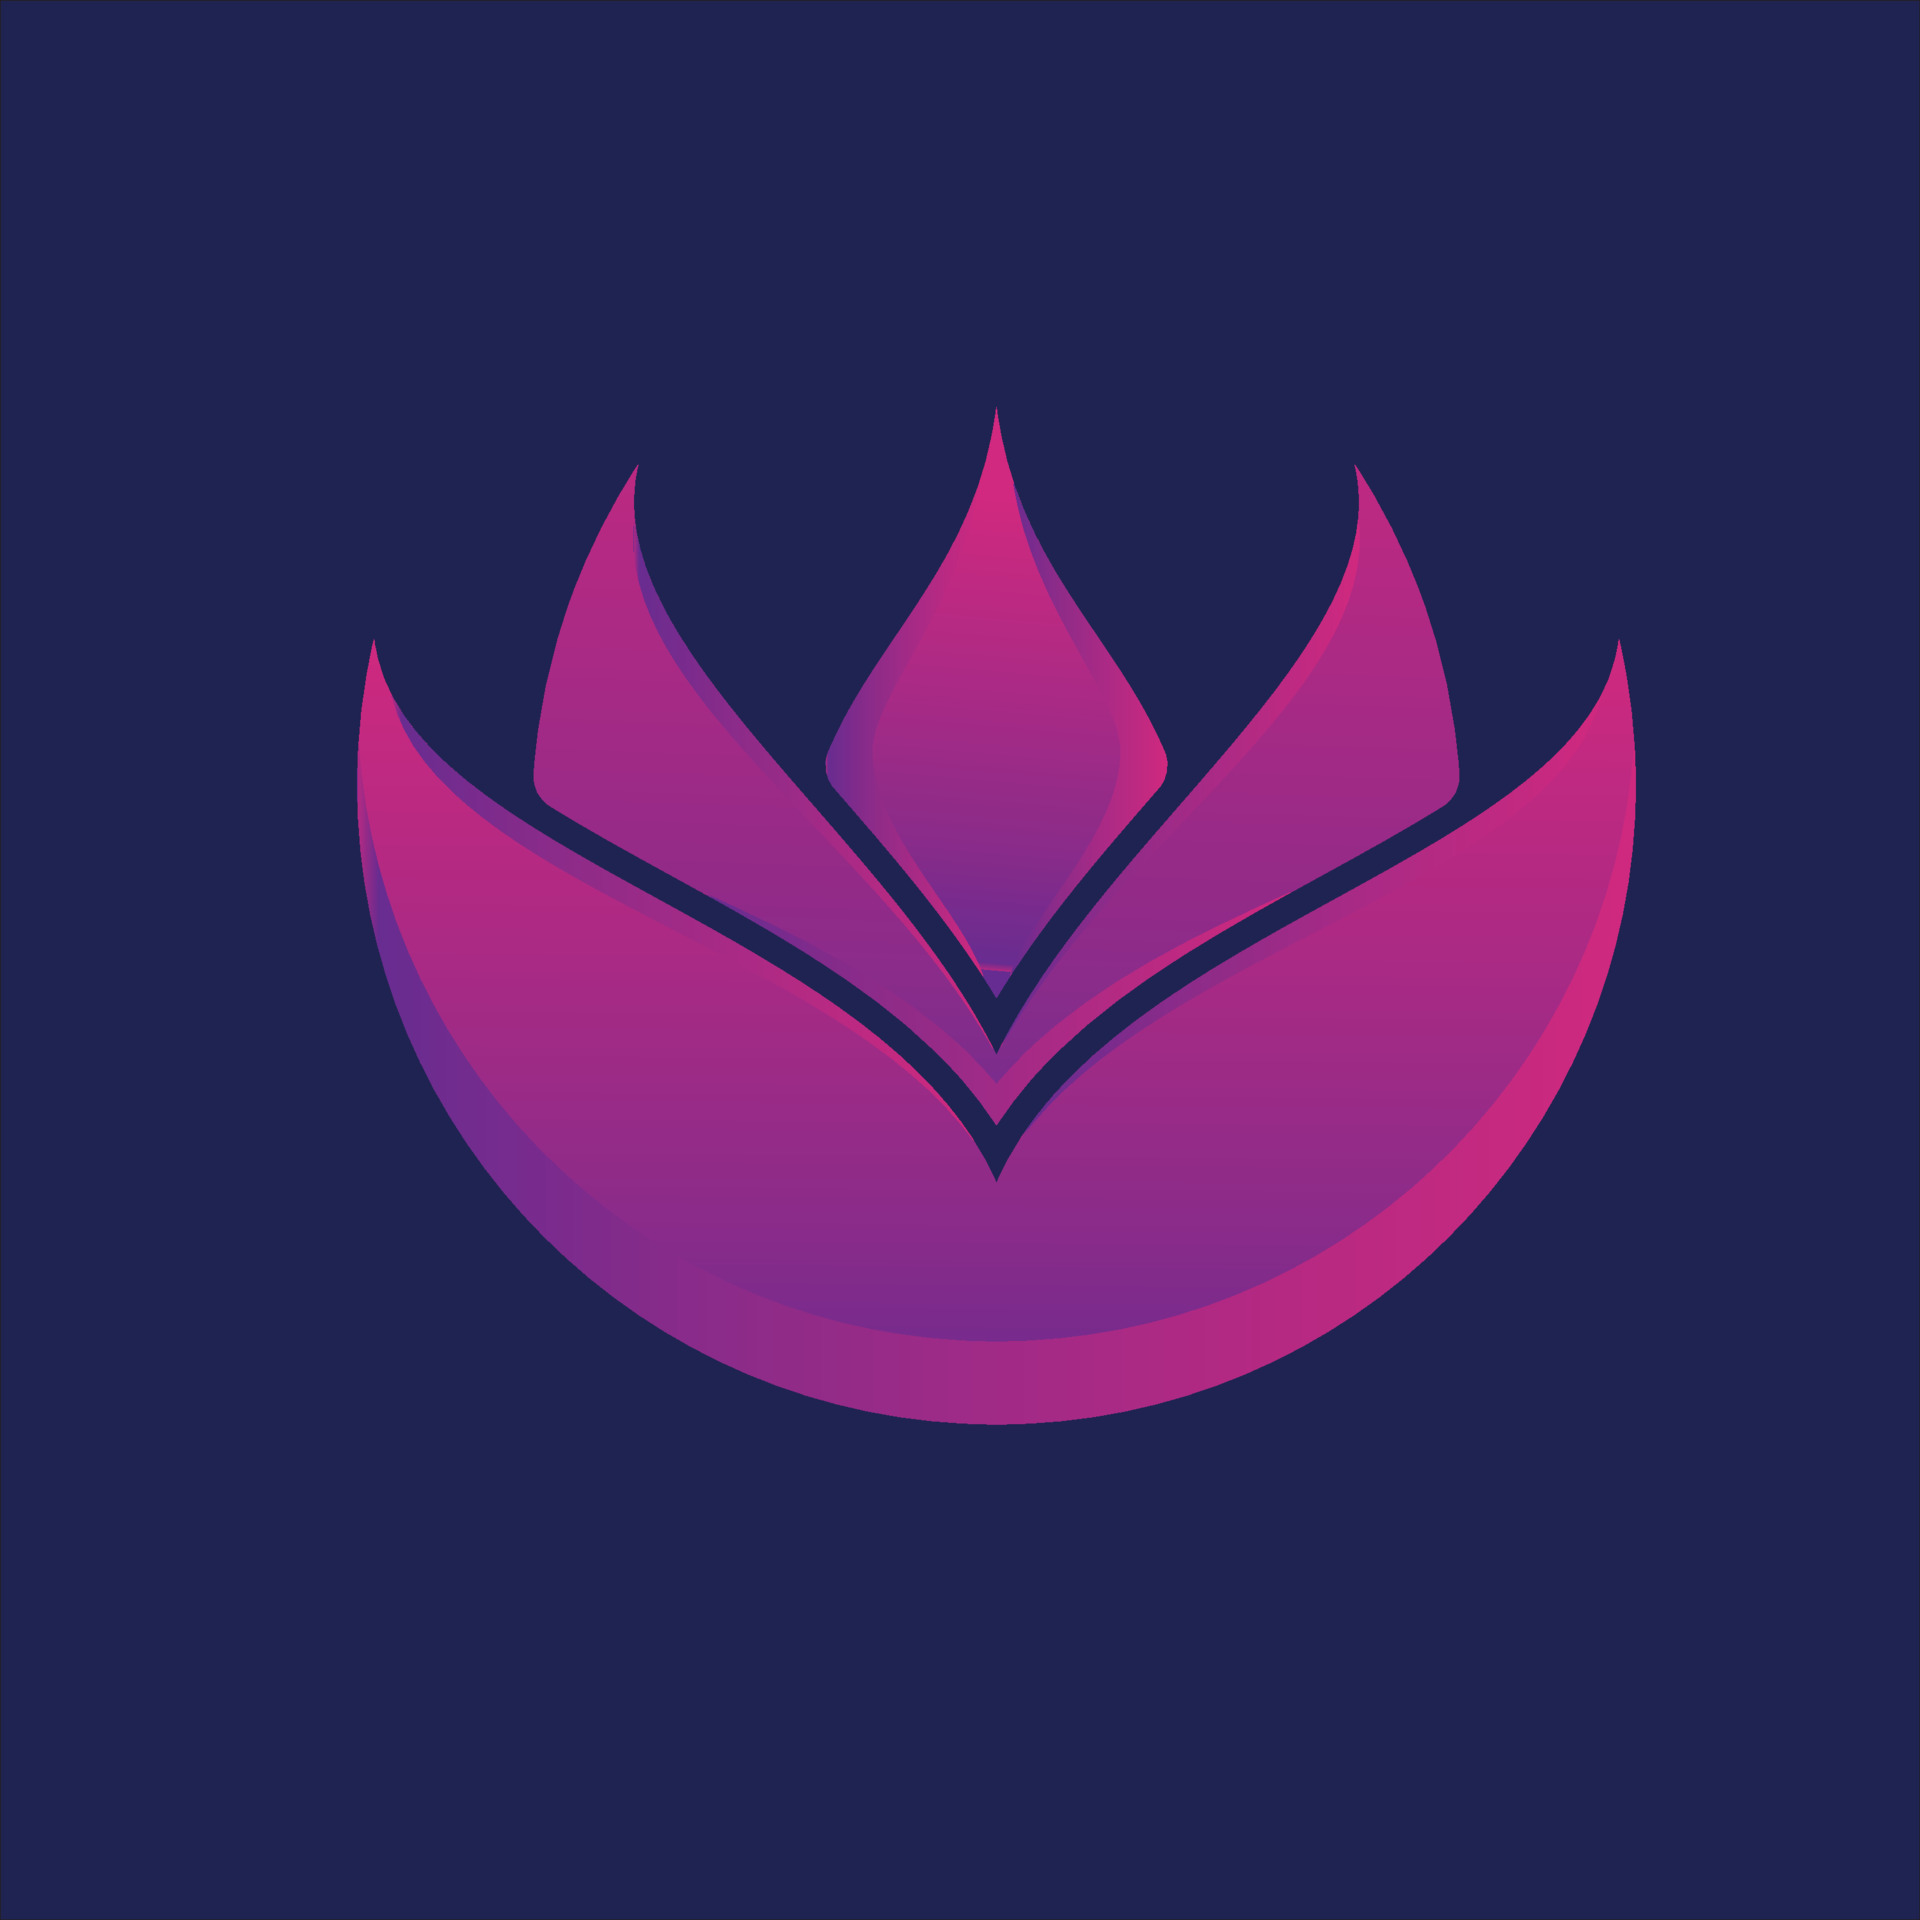 Beauty lotus flower logo 24185465 Vector Art at Vecteezy